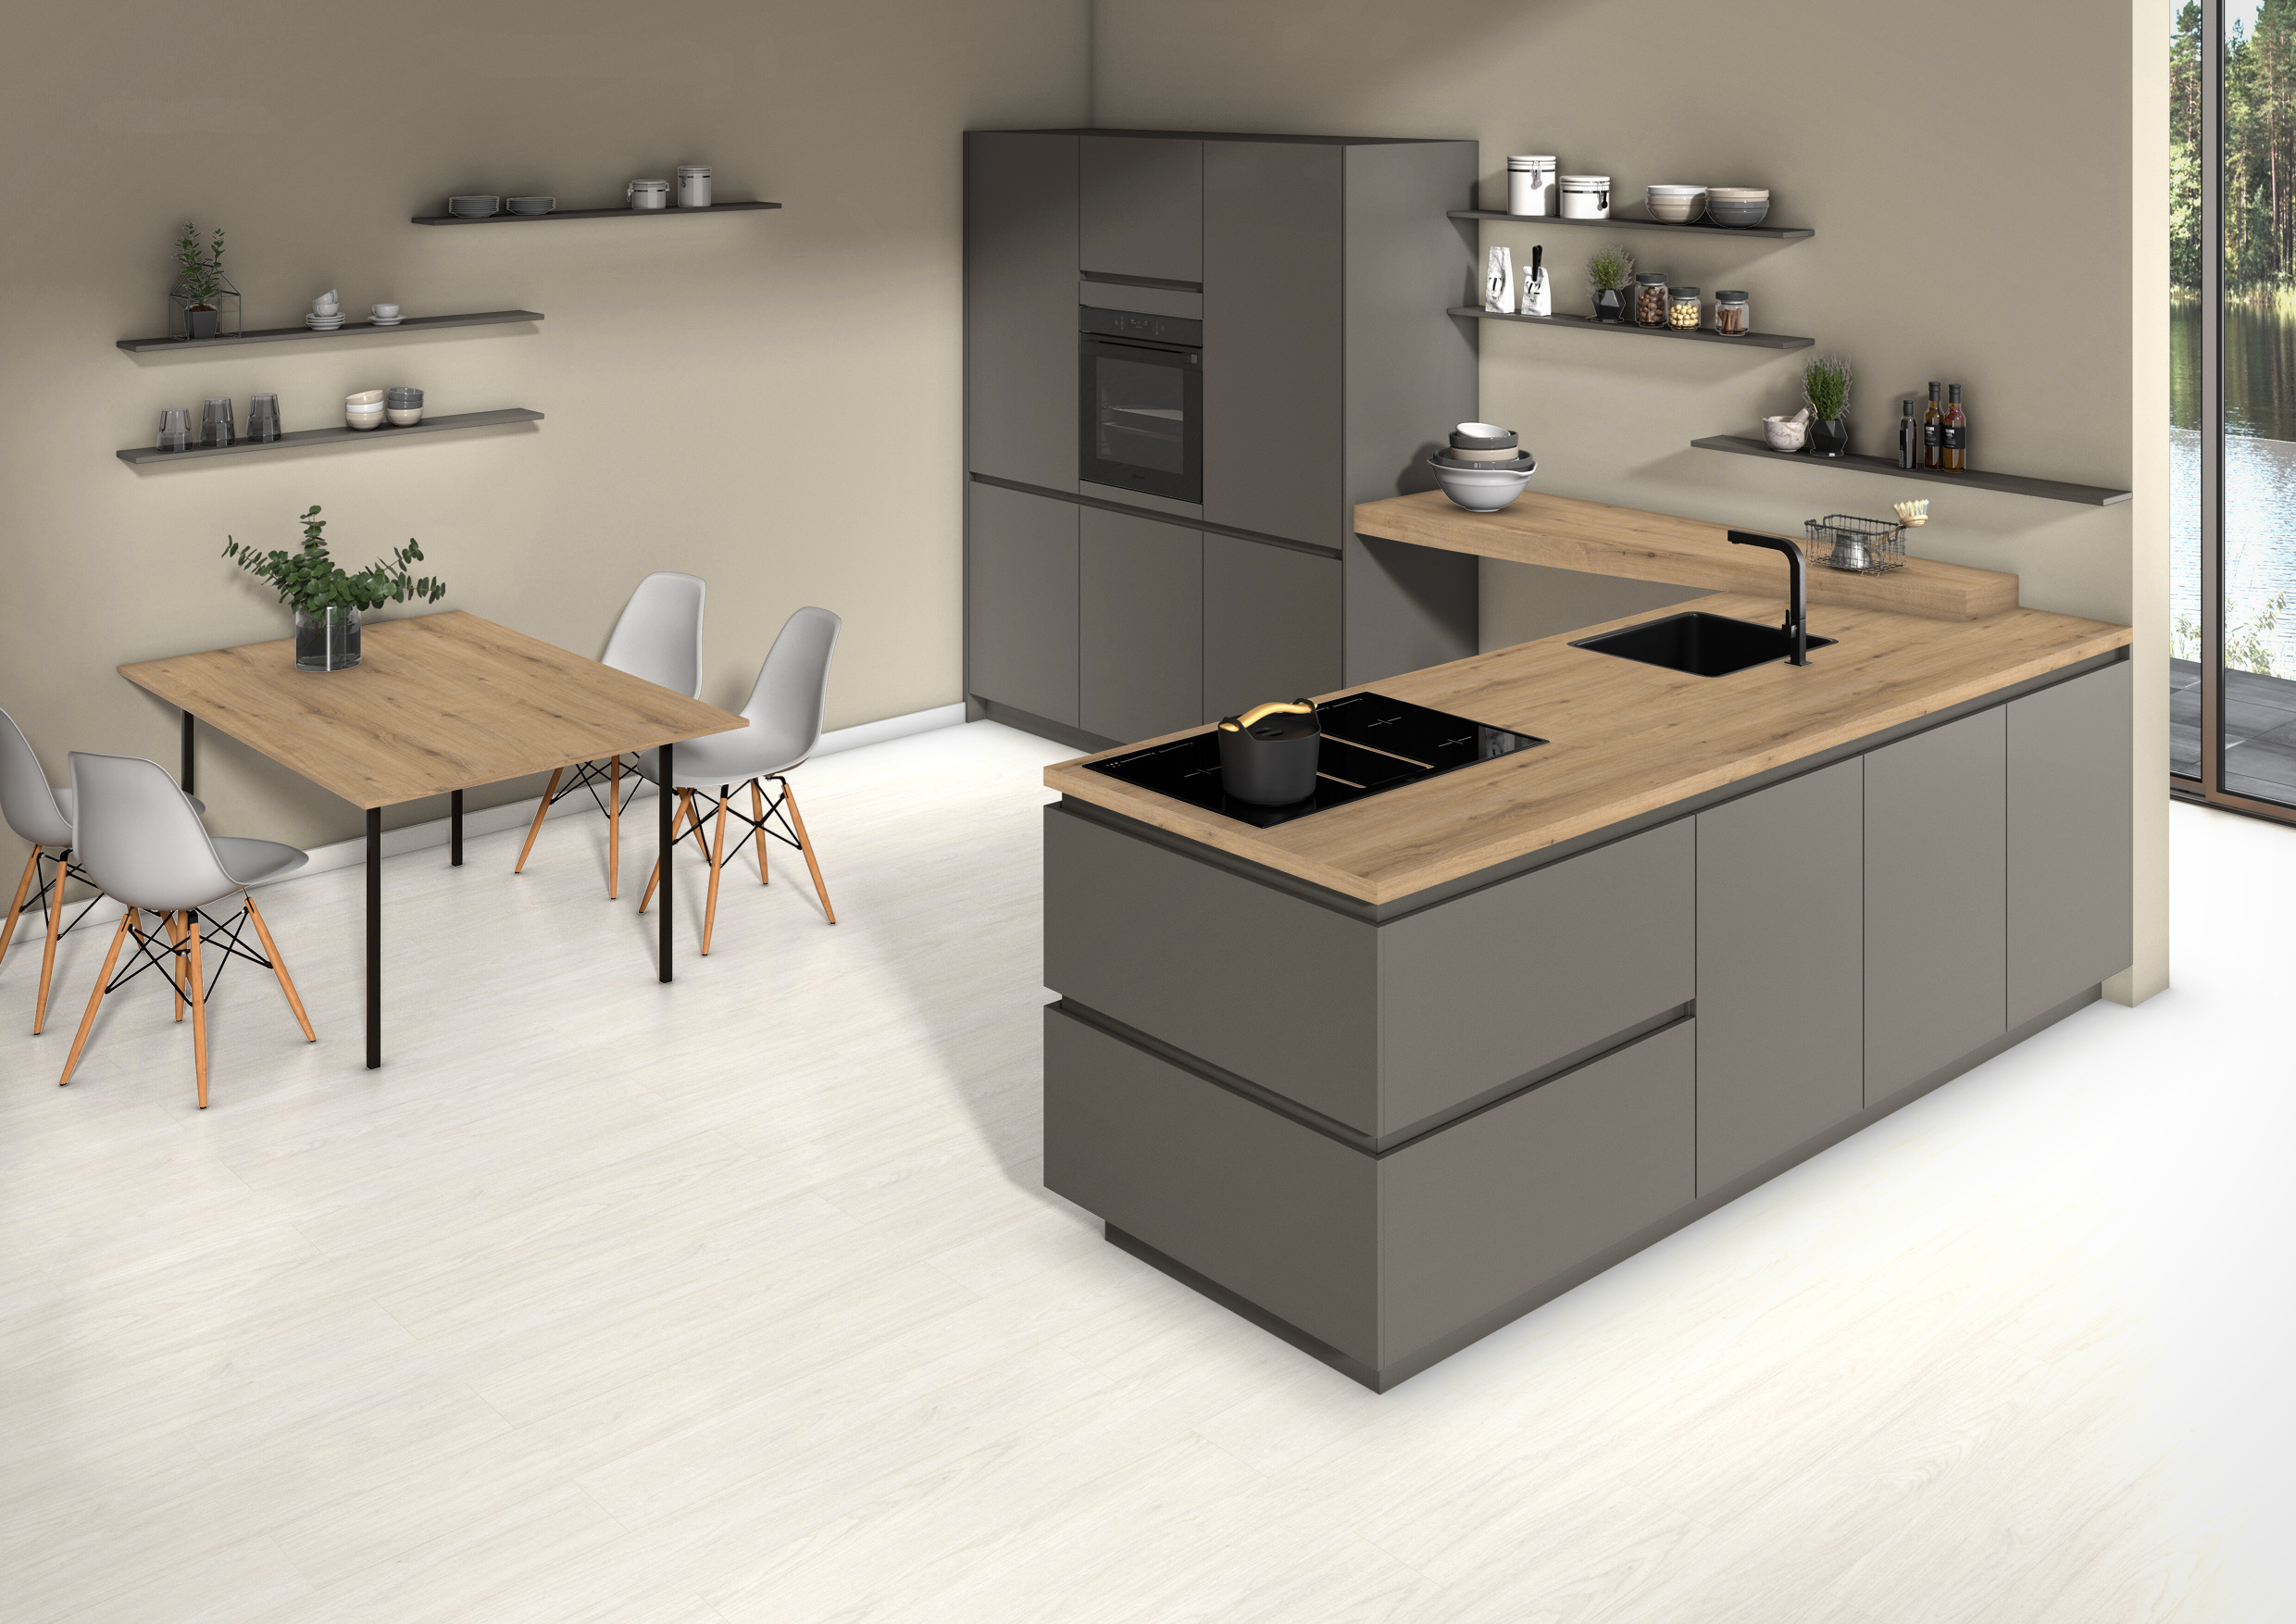 Aspects bespoke graphite grey kitchen